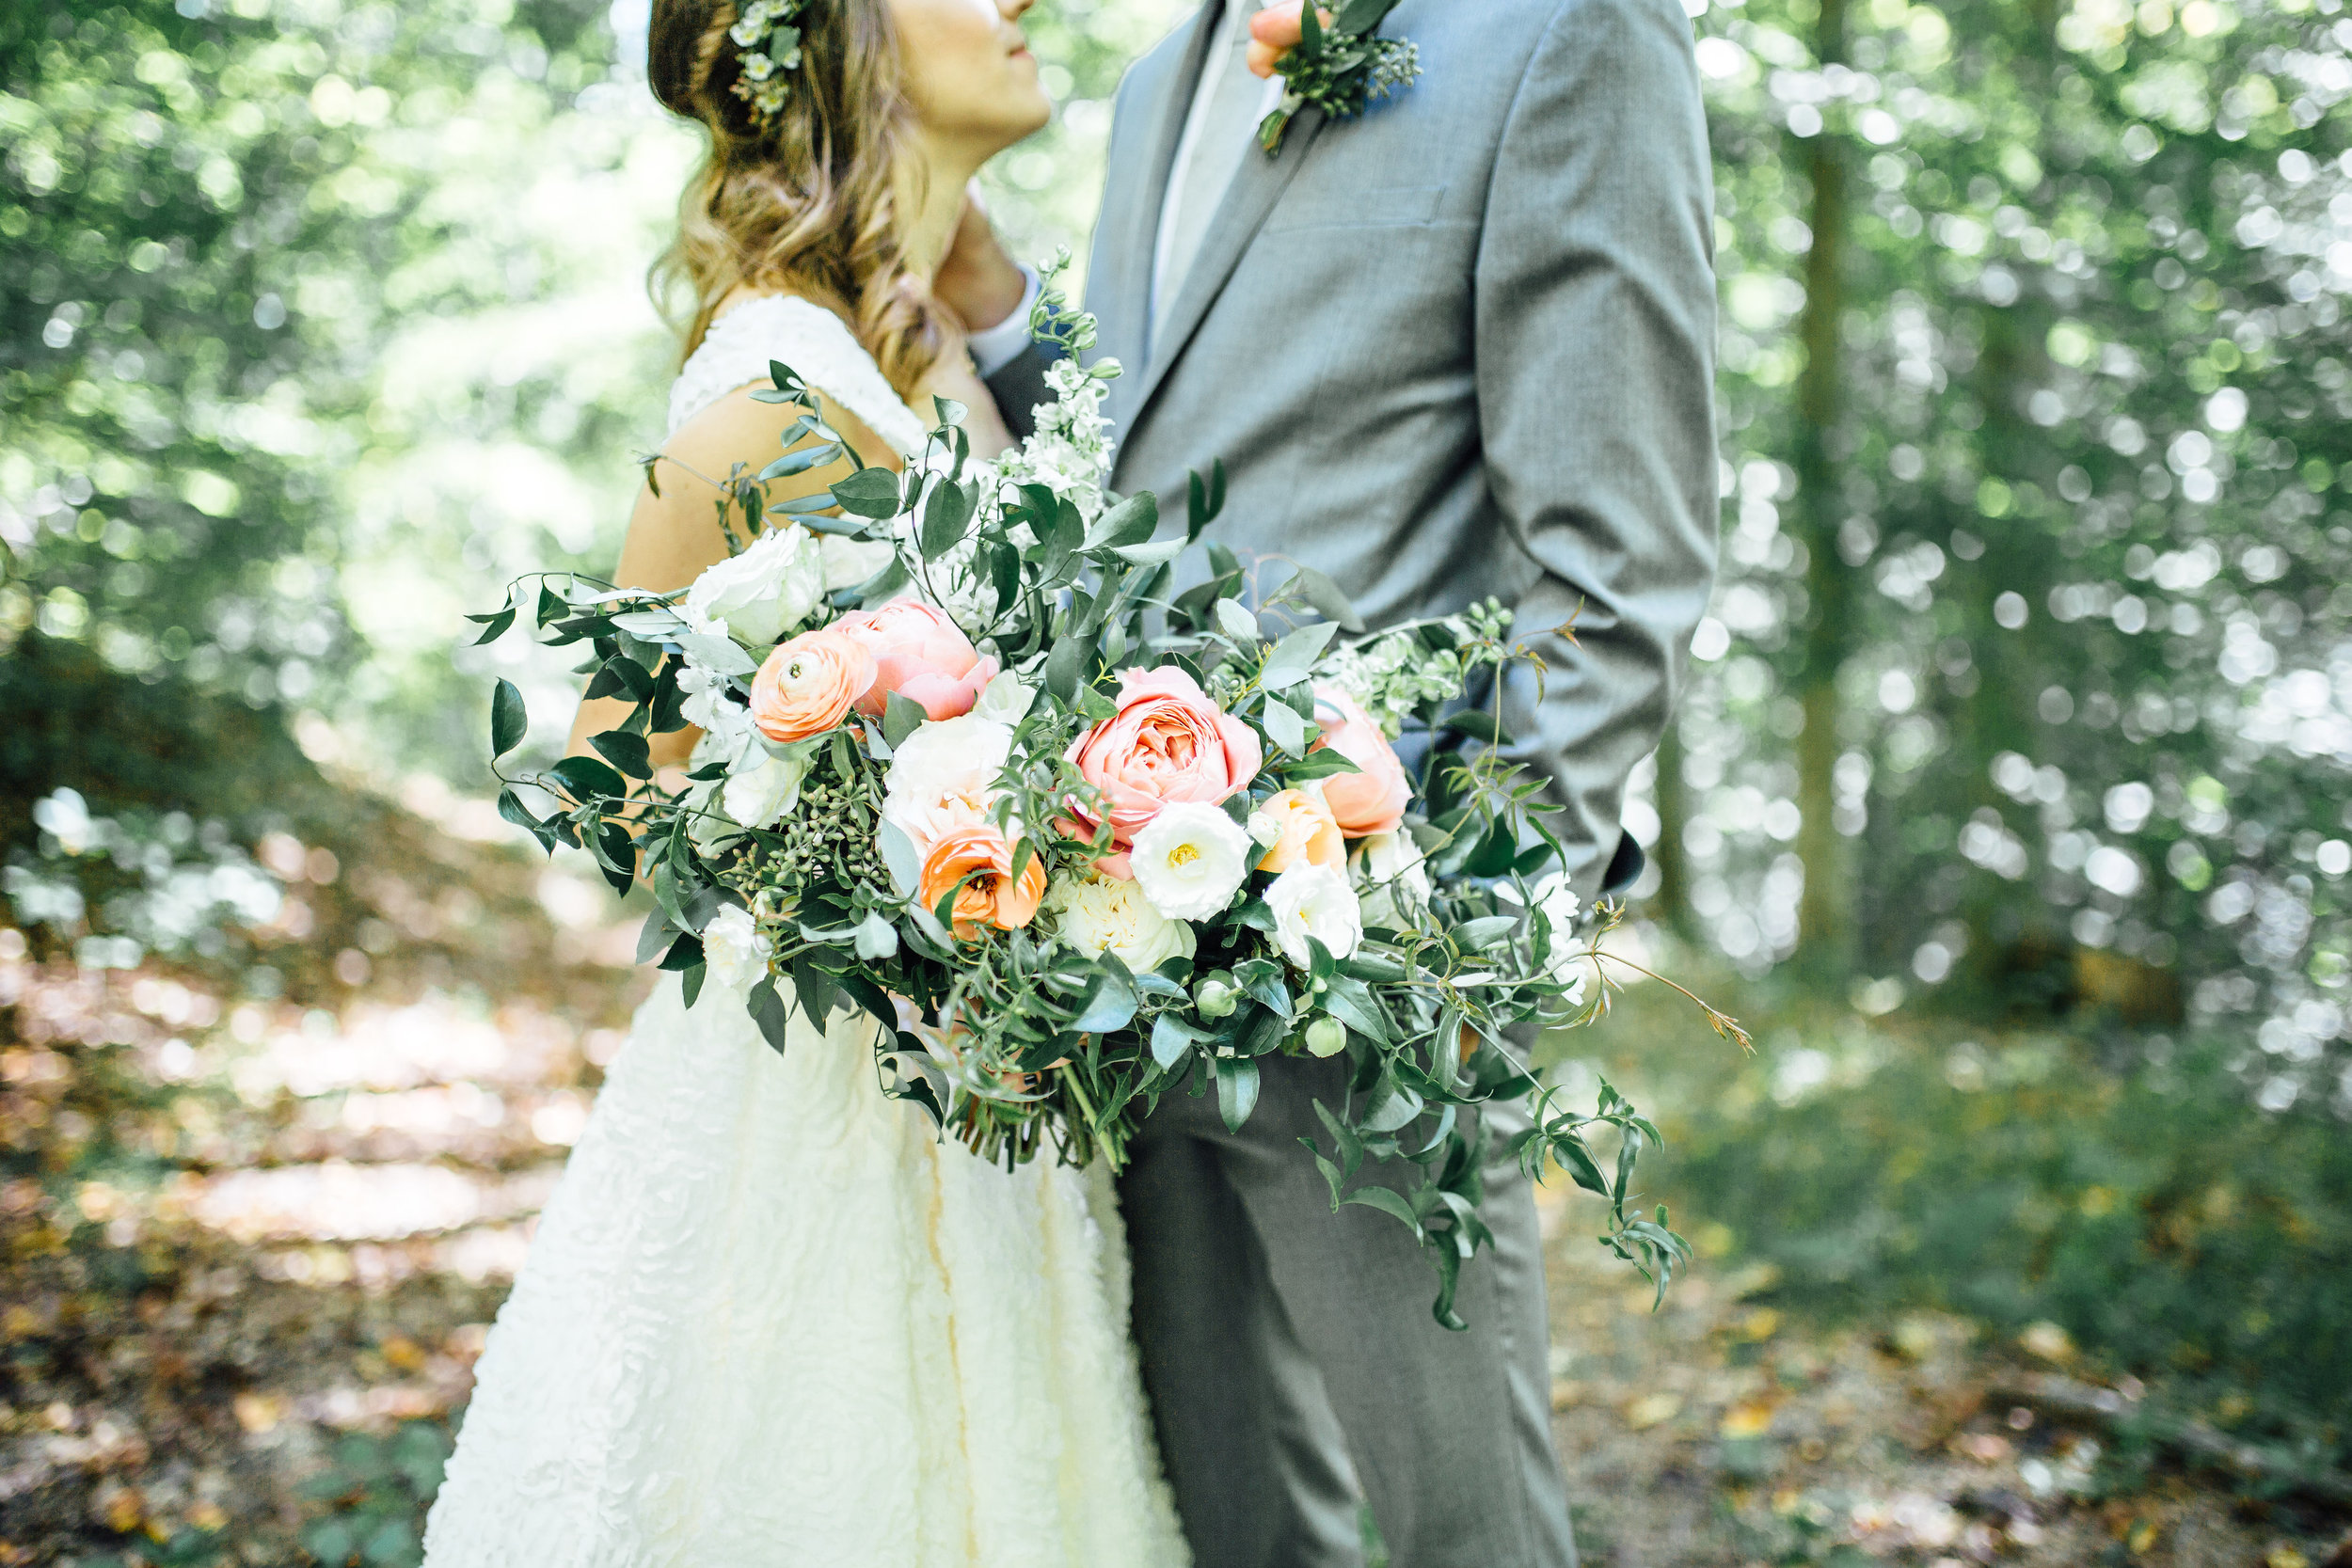 Natural, organic bridal bouquet with garden roses and ranunculus // Nashville Wedding Florist